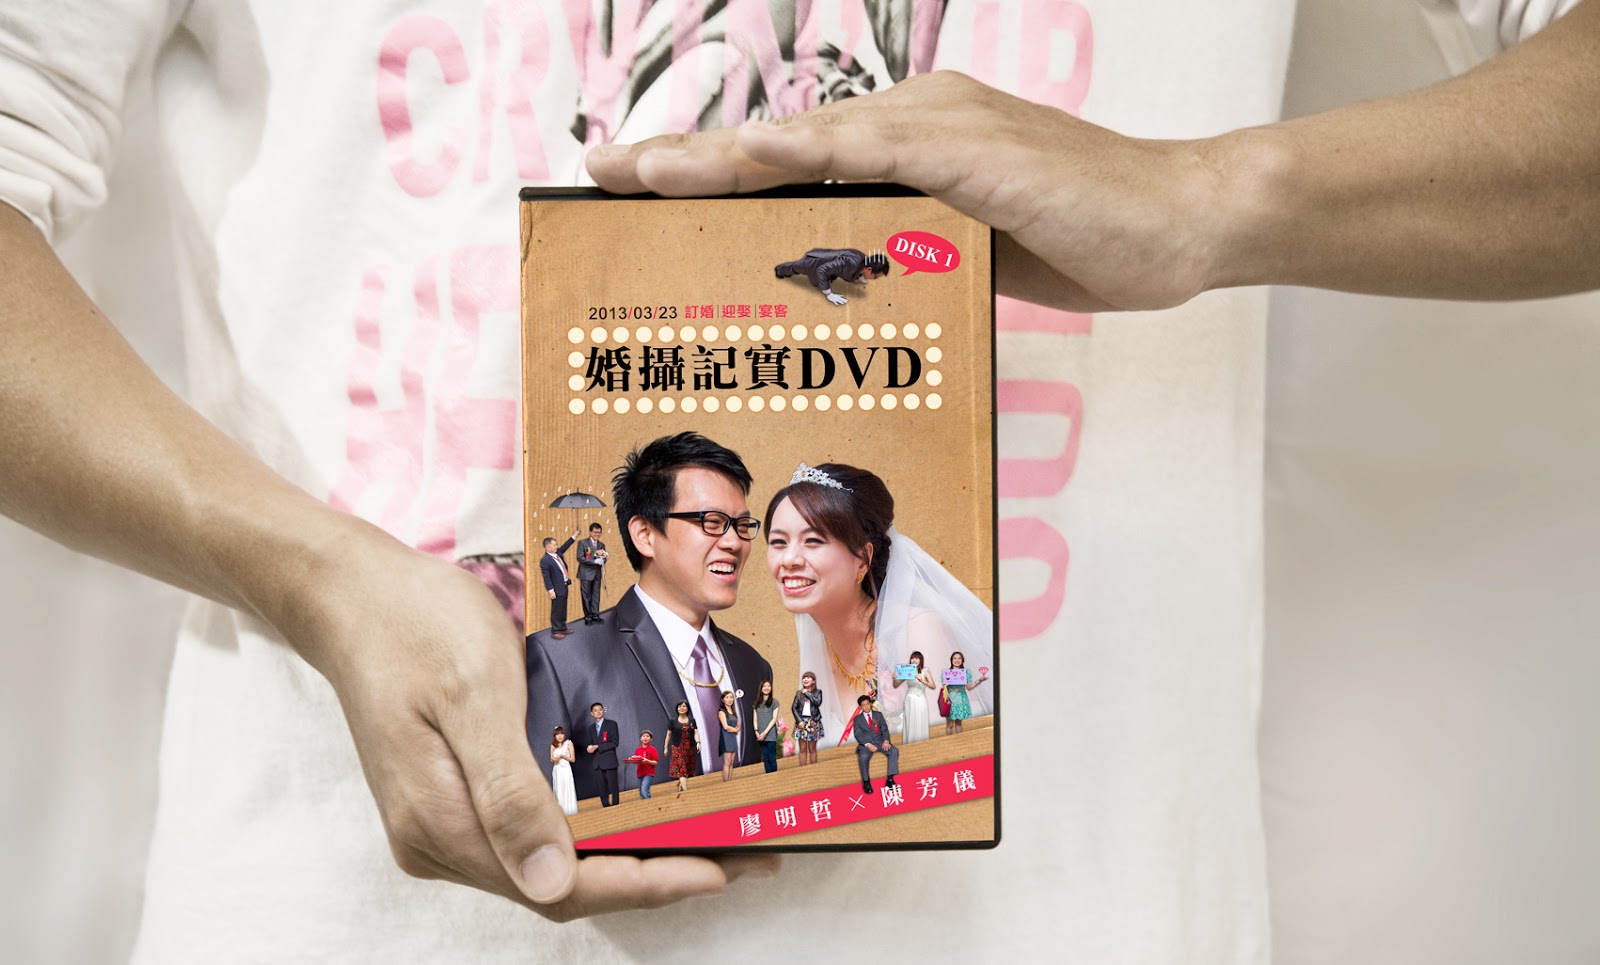 SHOWCASE作品展示 | 明哲×芳儀婚攝DVD封面設計 by MUMULab.com